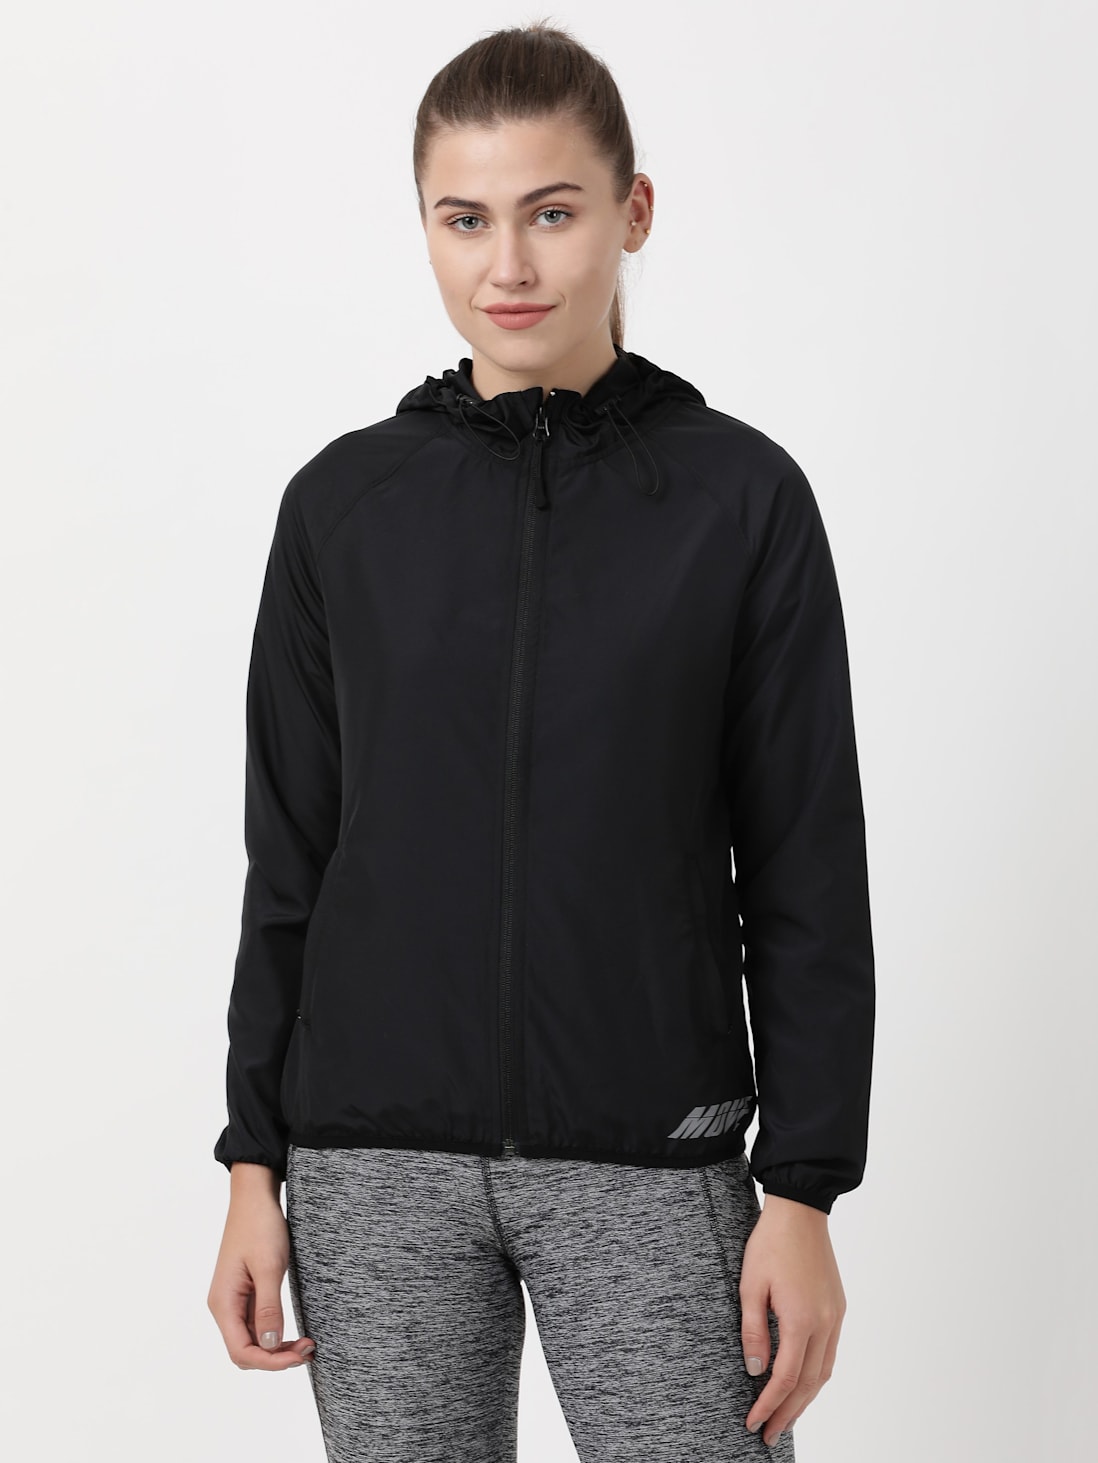 jockey womens Black full zip athletic jacket Size Medium Thumb holes | eBay